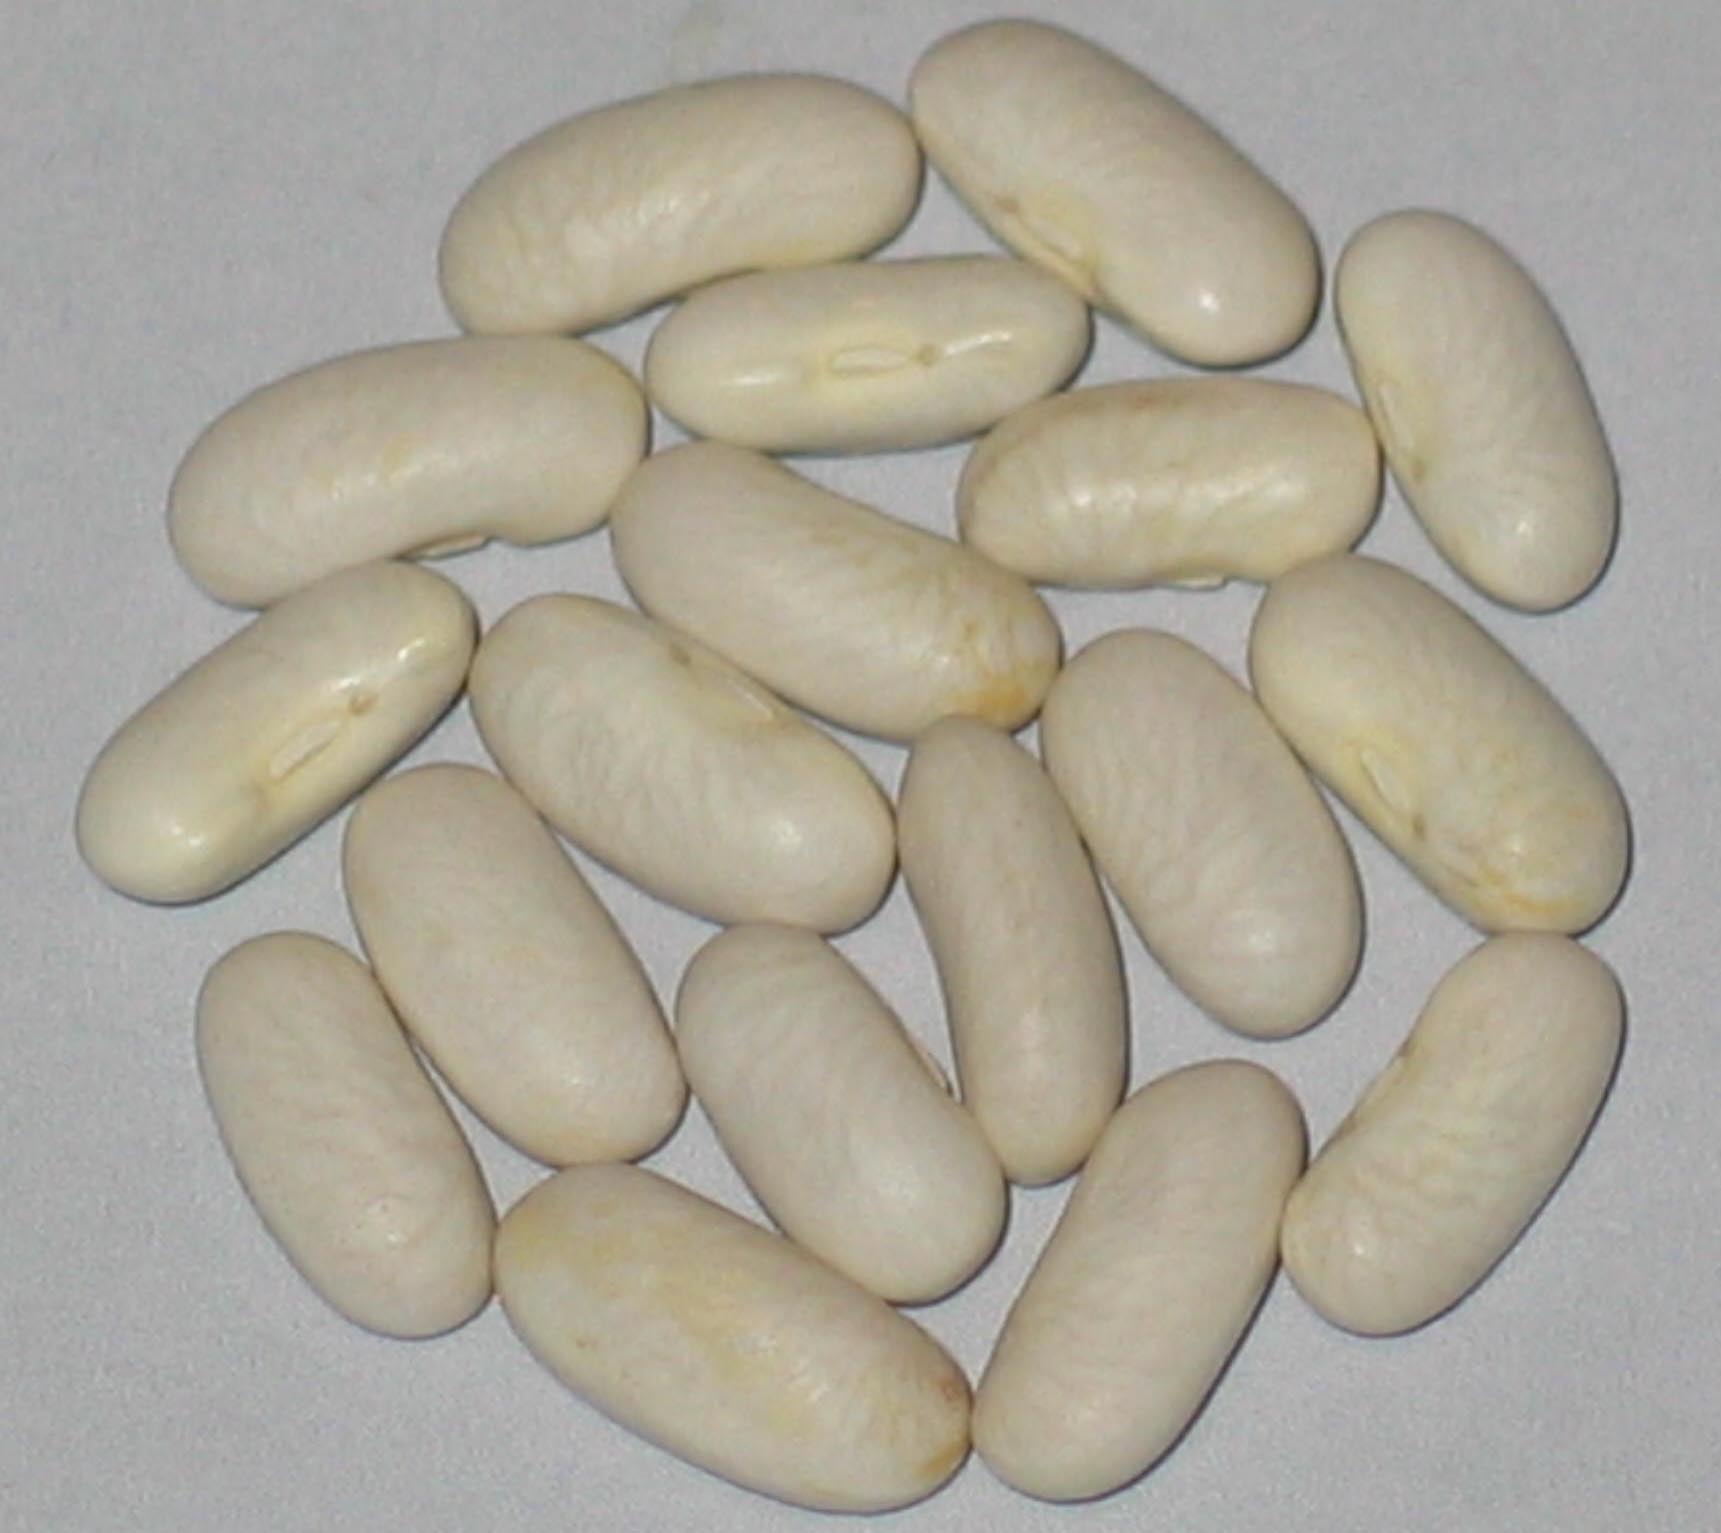 image of Kjoto beans